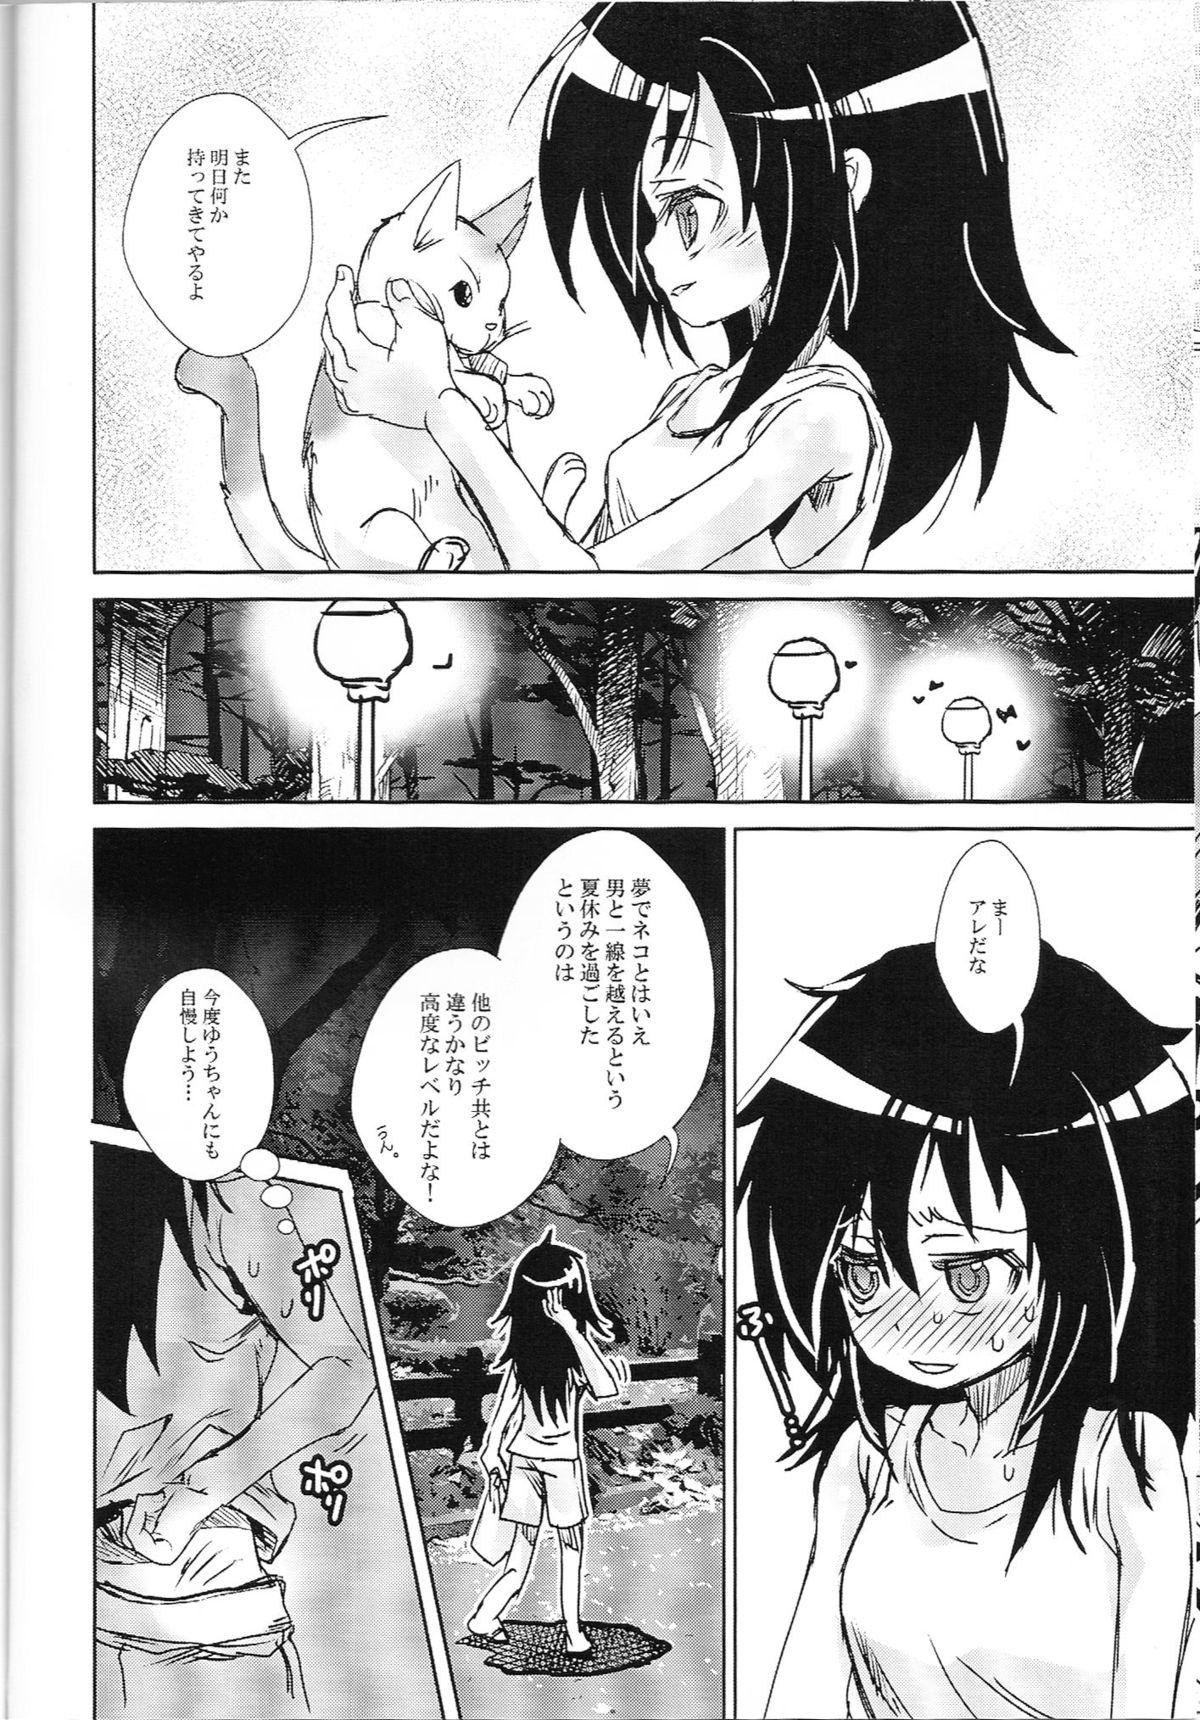 Toilet Watashi ga Moteru noha Neko ni dake! - Its not my fault that im not popular Wet - Page 13